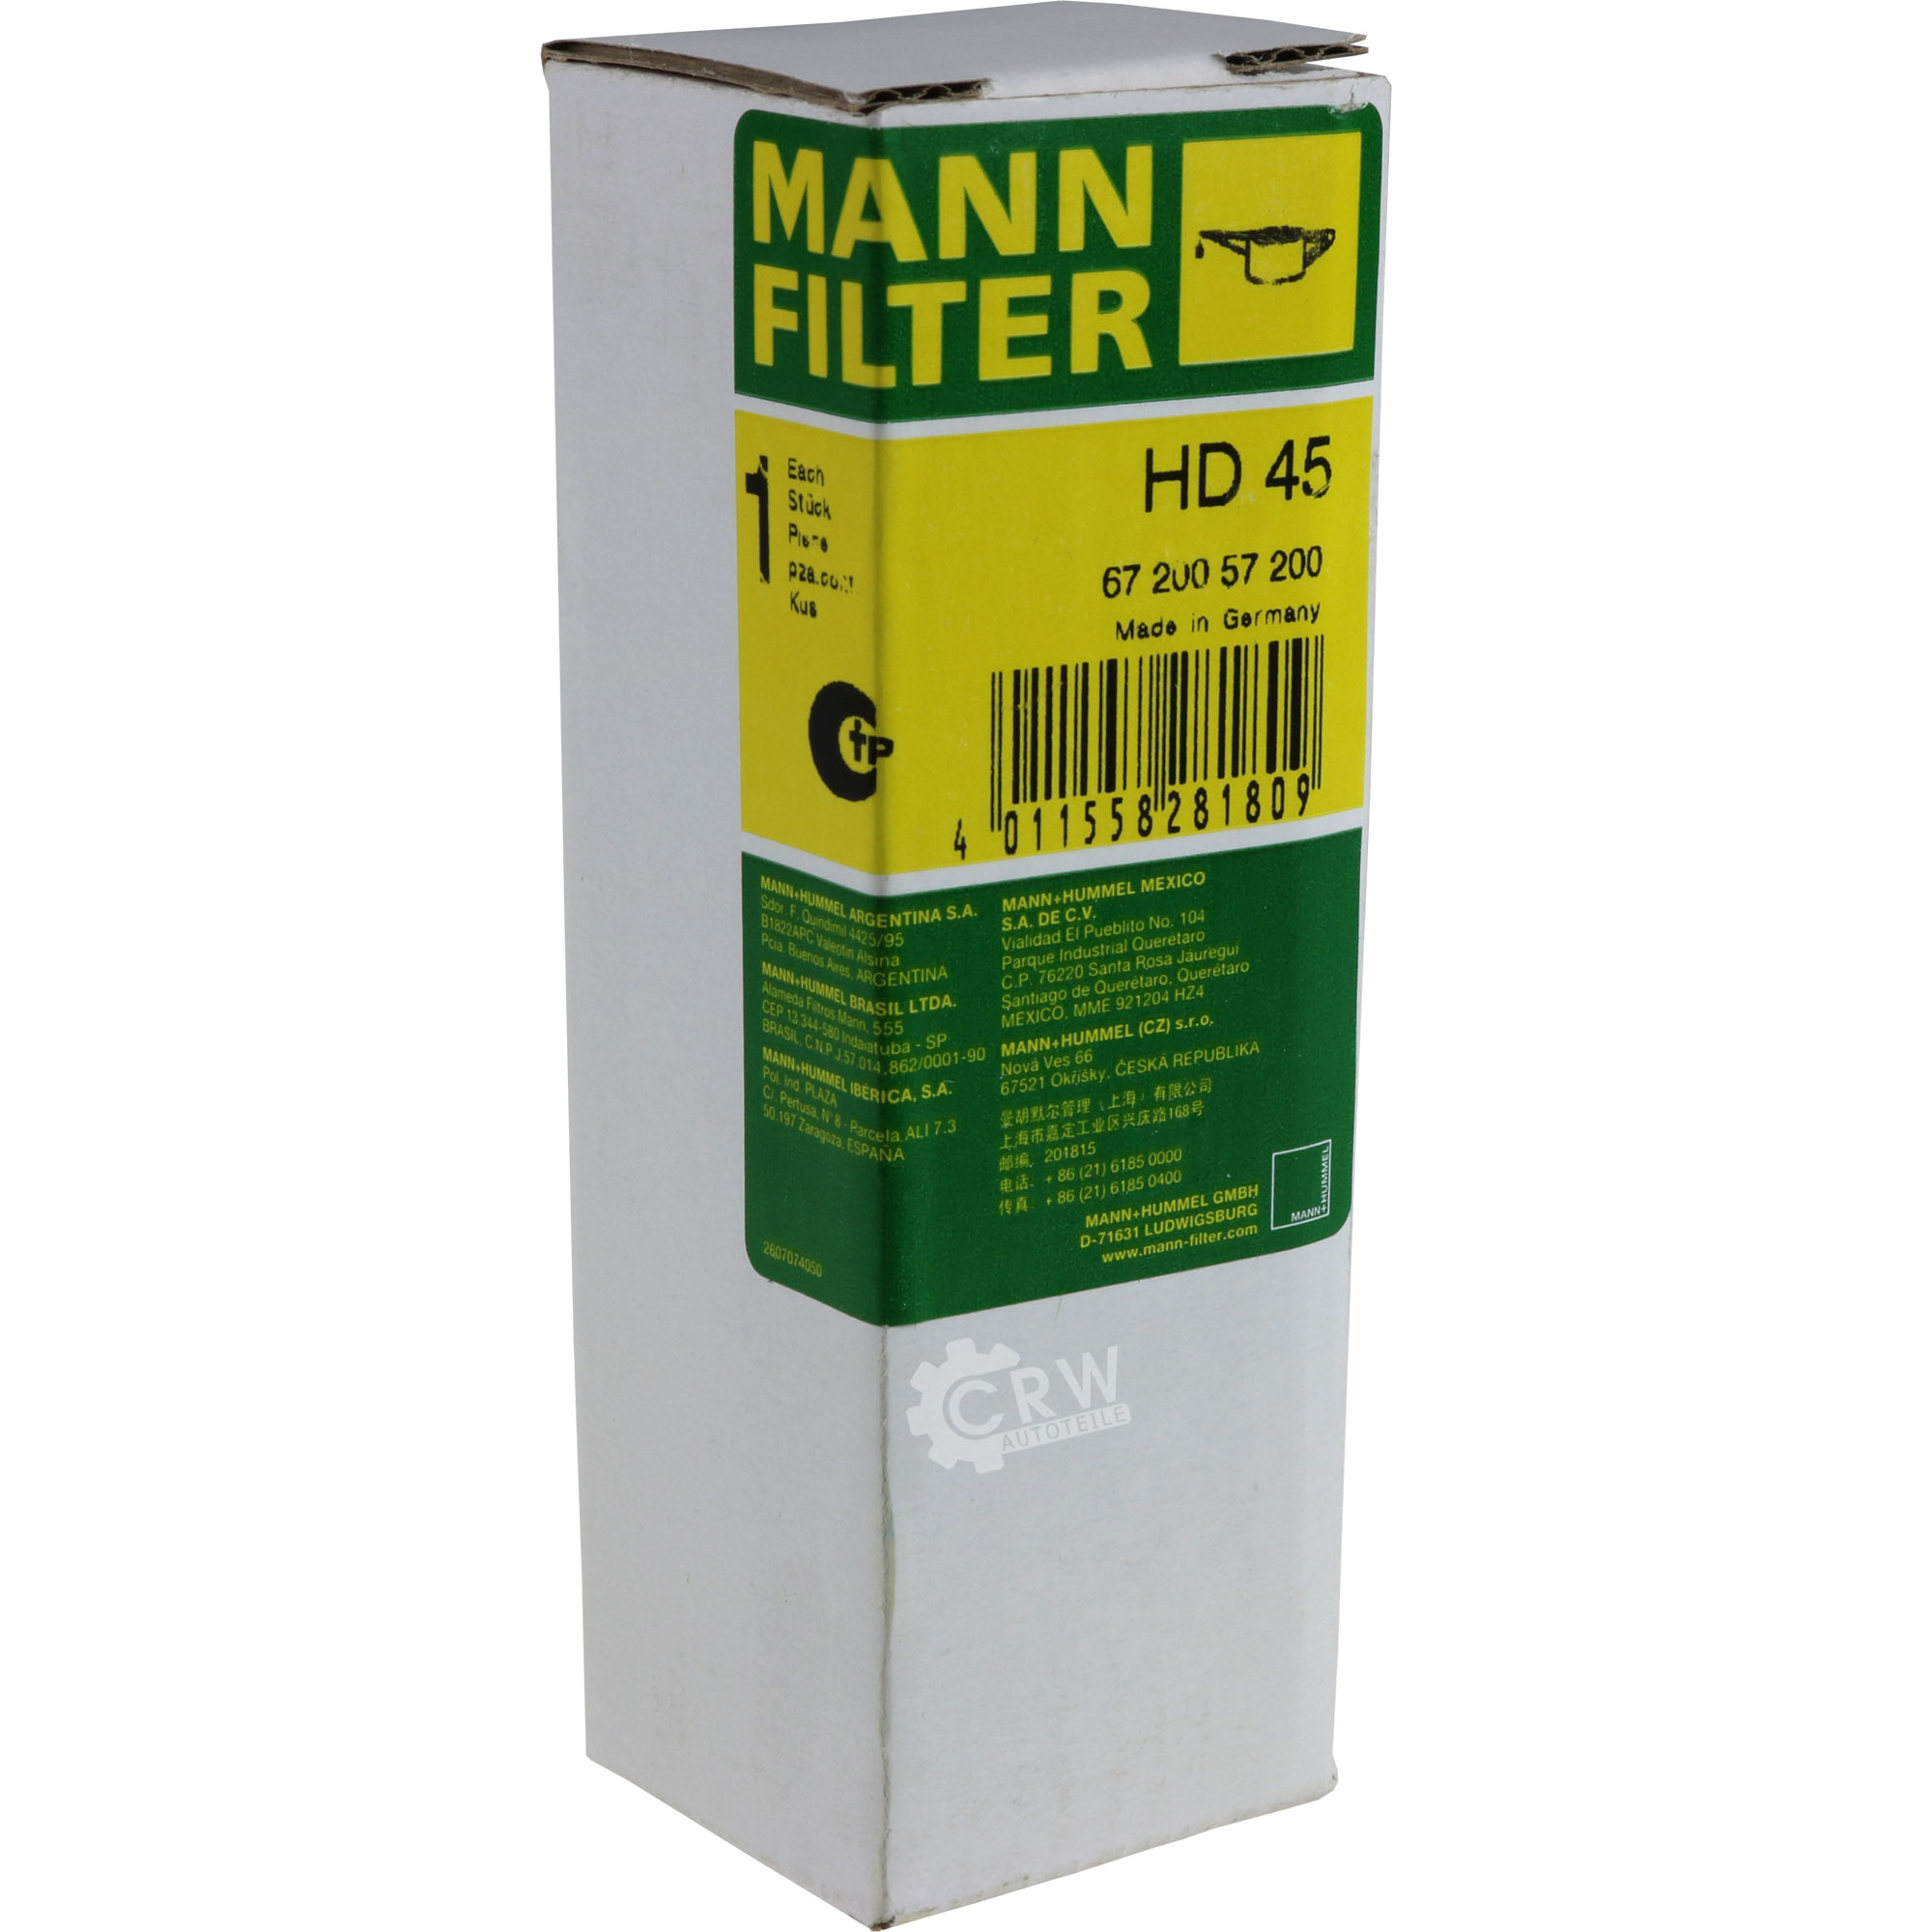 MANN-FILTER Hydraulikfilter für Lenkung HD 45